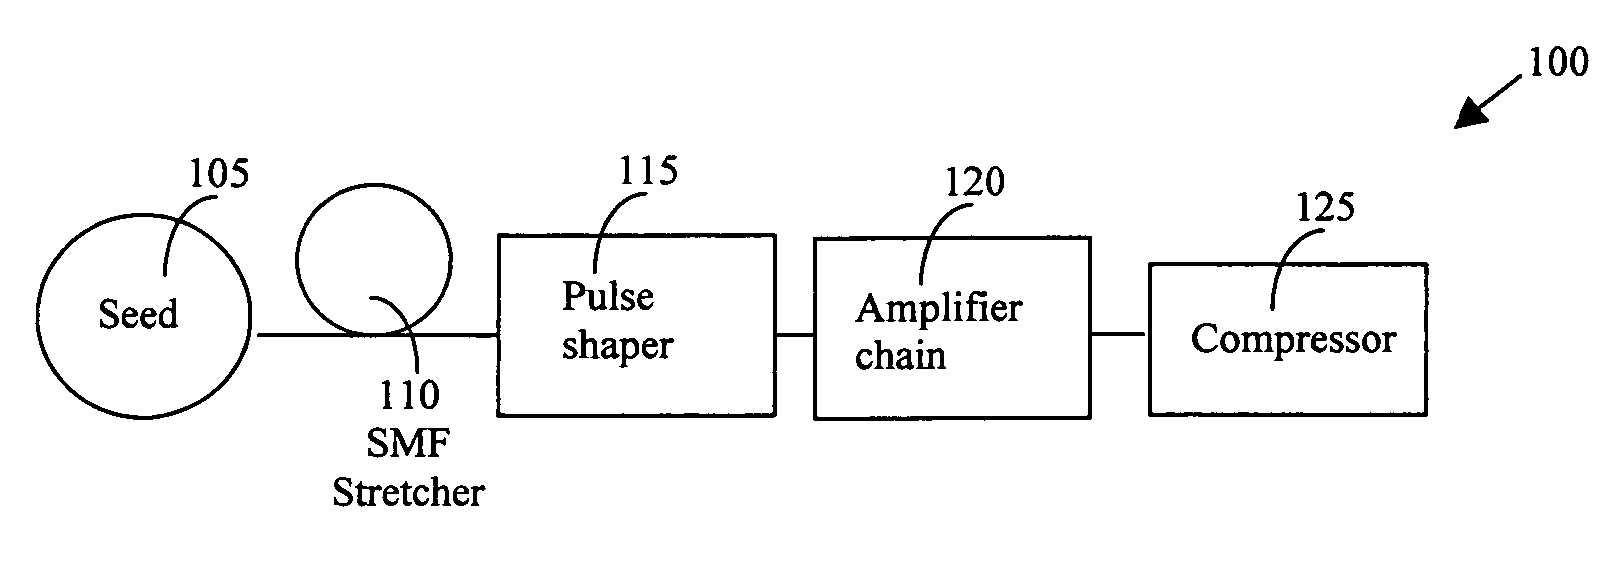 Dynamic amplitude and spectral shaper in fiber laser amplification system